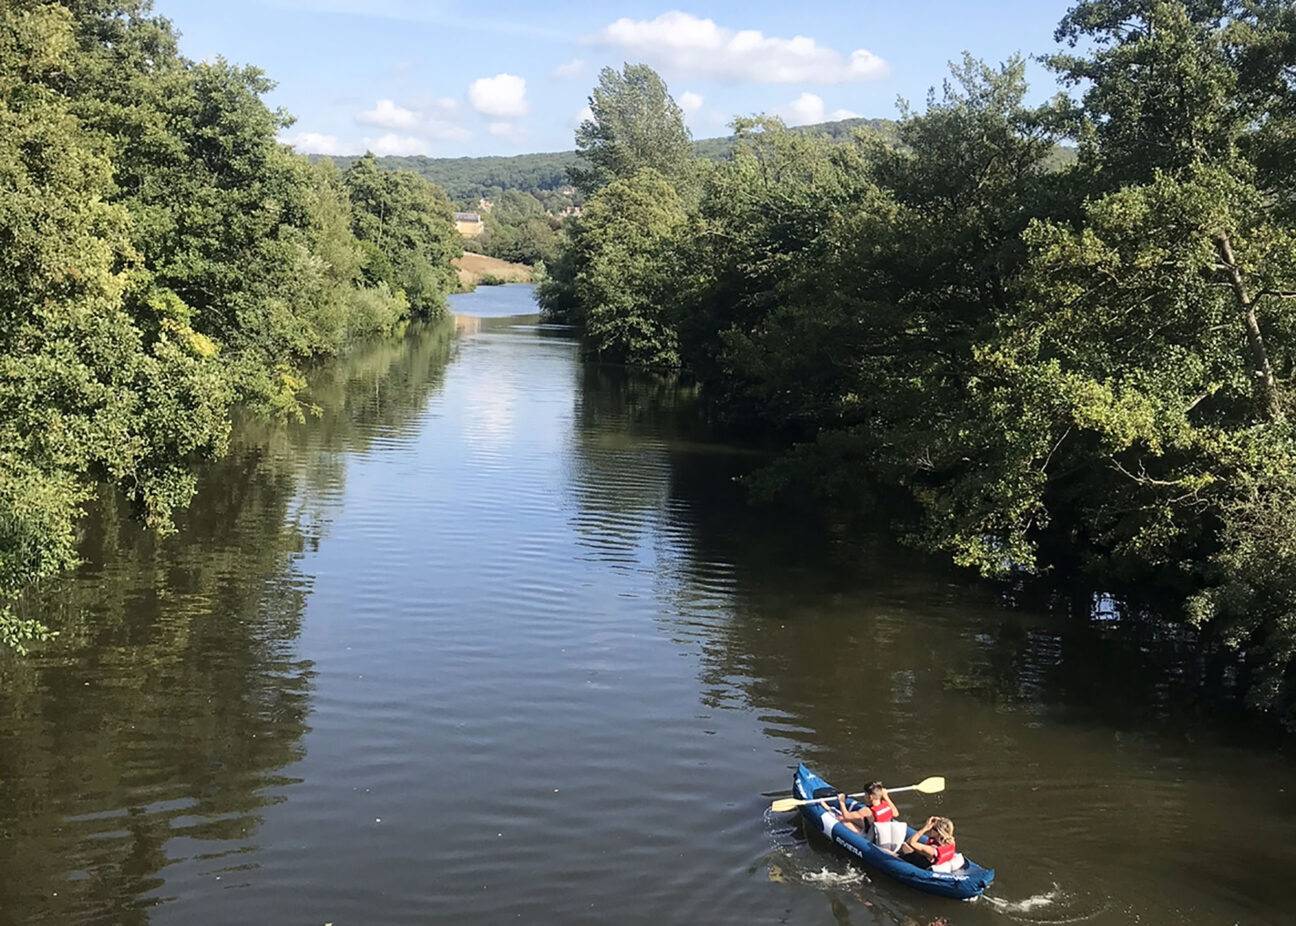 Kayaking along the river in Batheaston